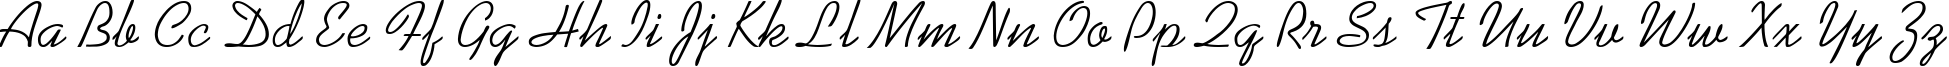 Пример написания английского алфавита шрифтом Swenson